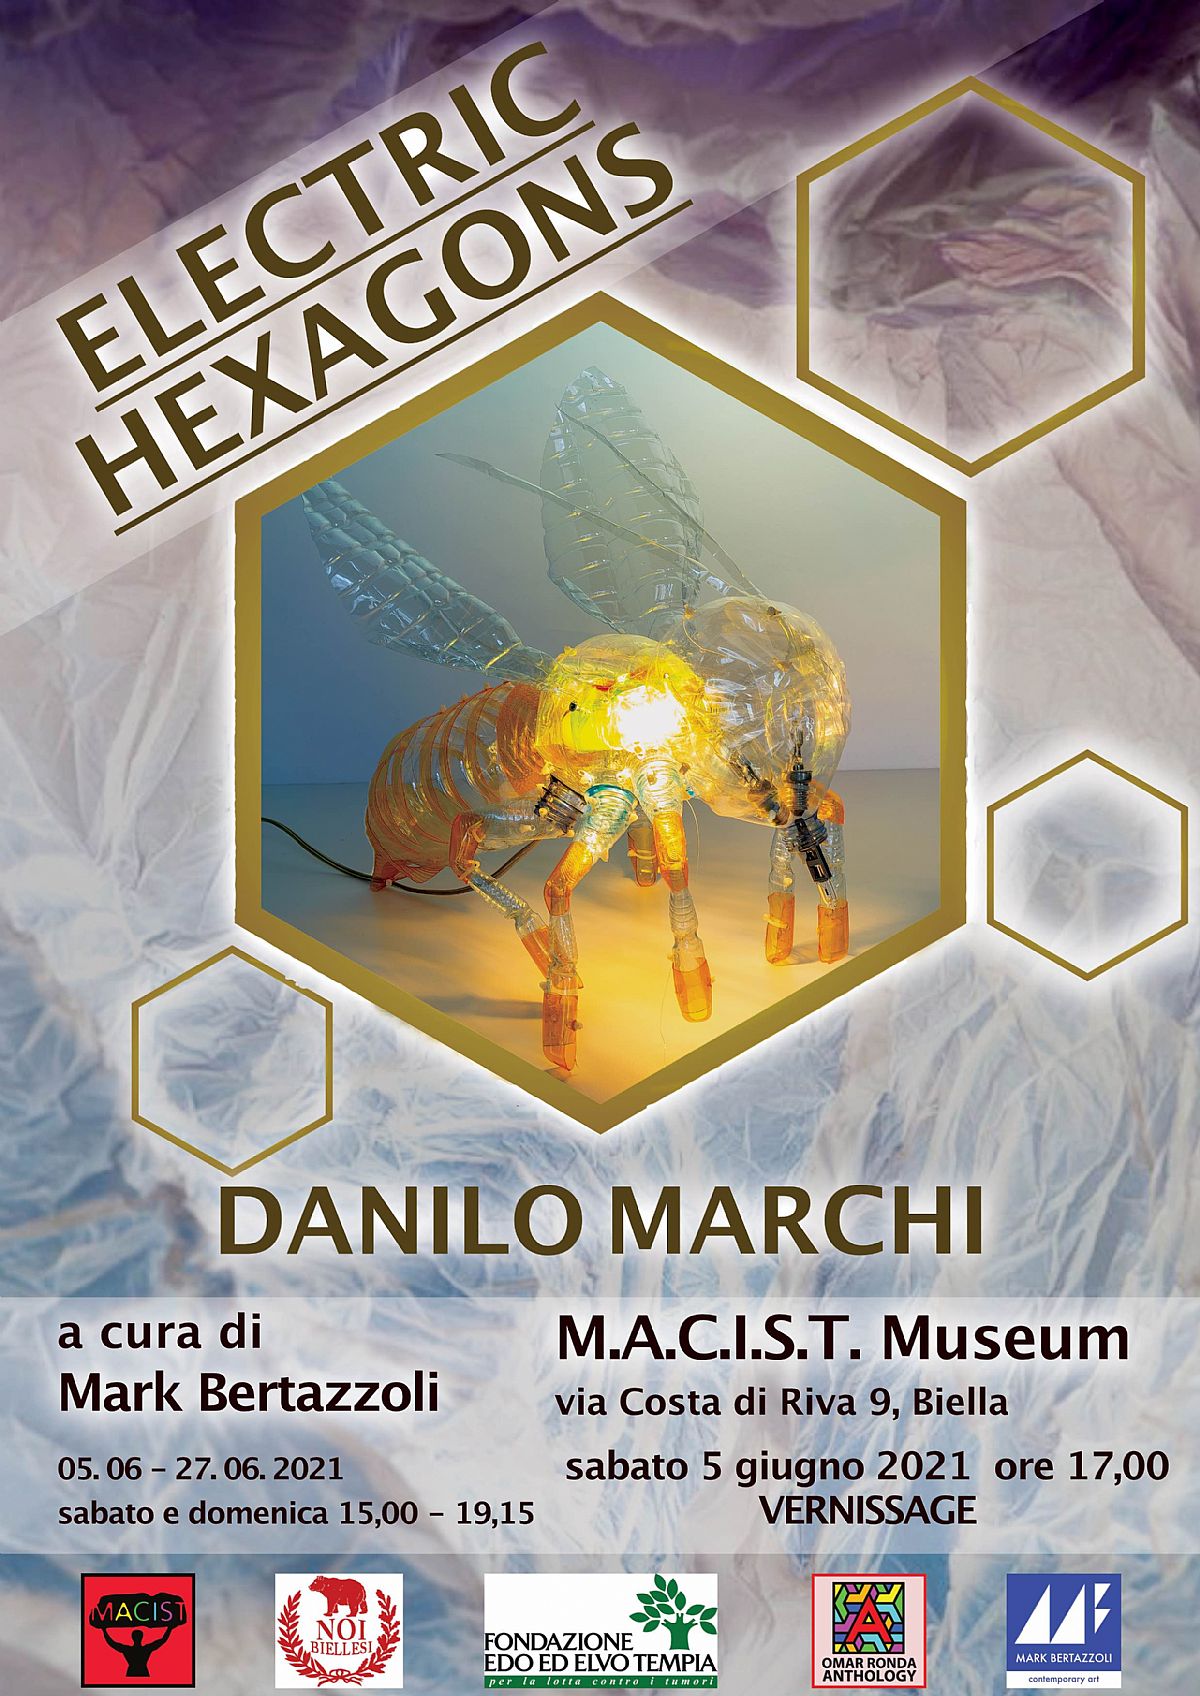 Danilo Marchi - Electric Hexagons